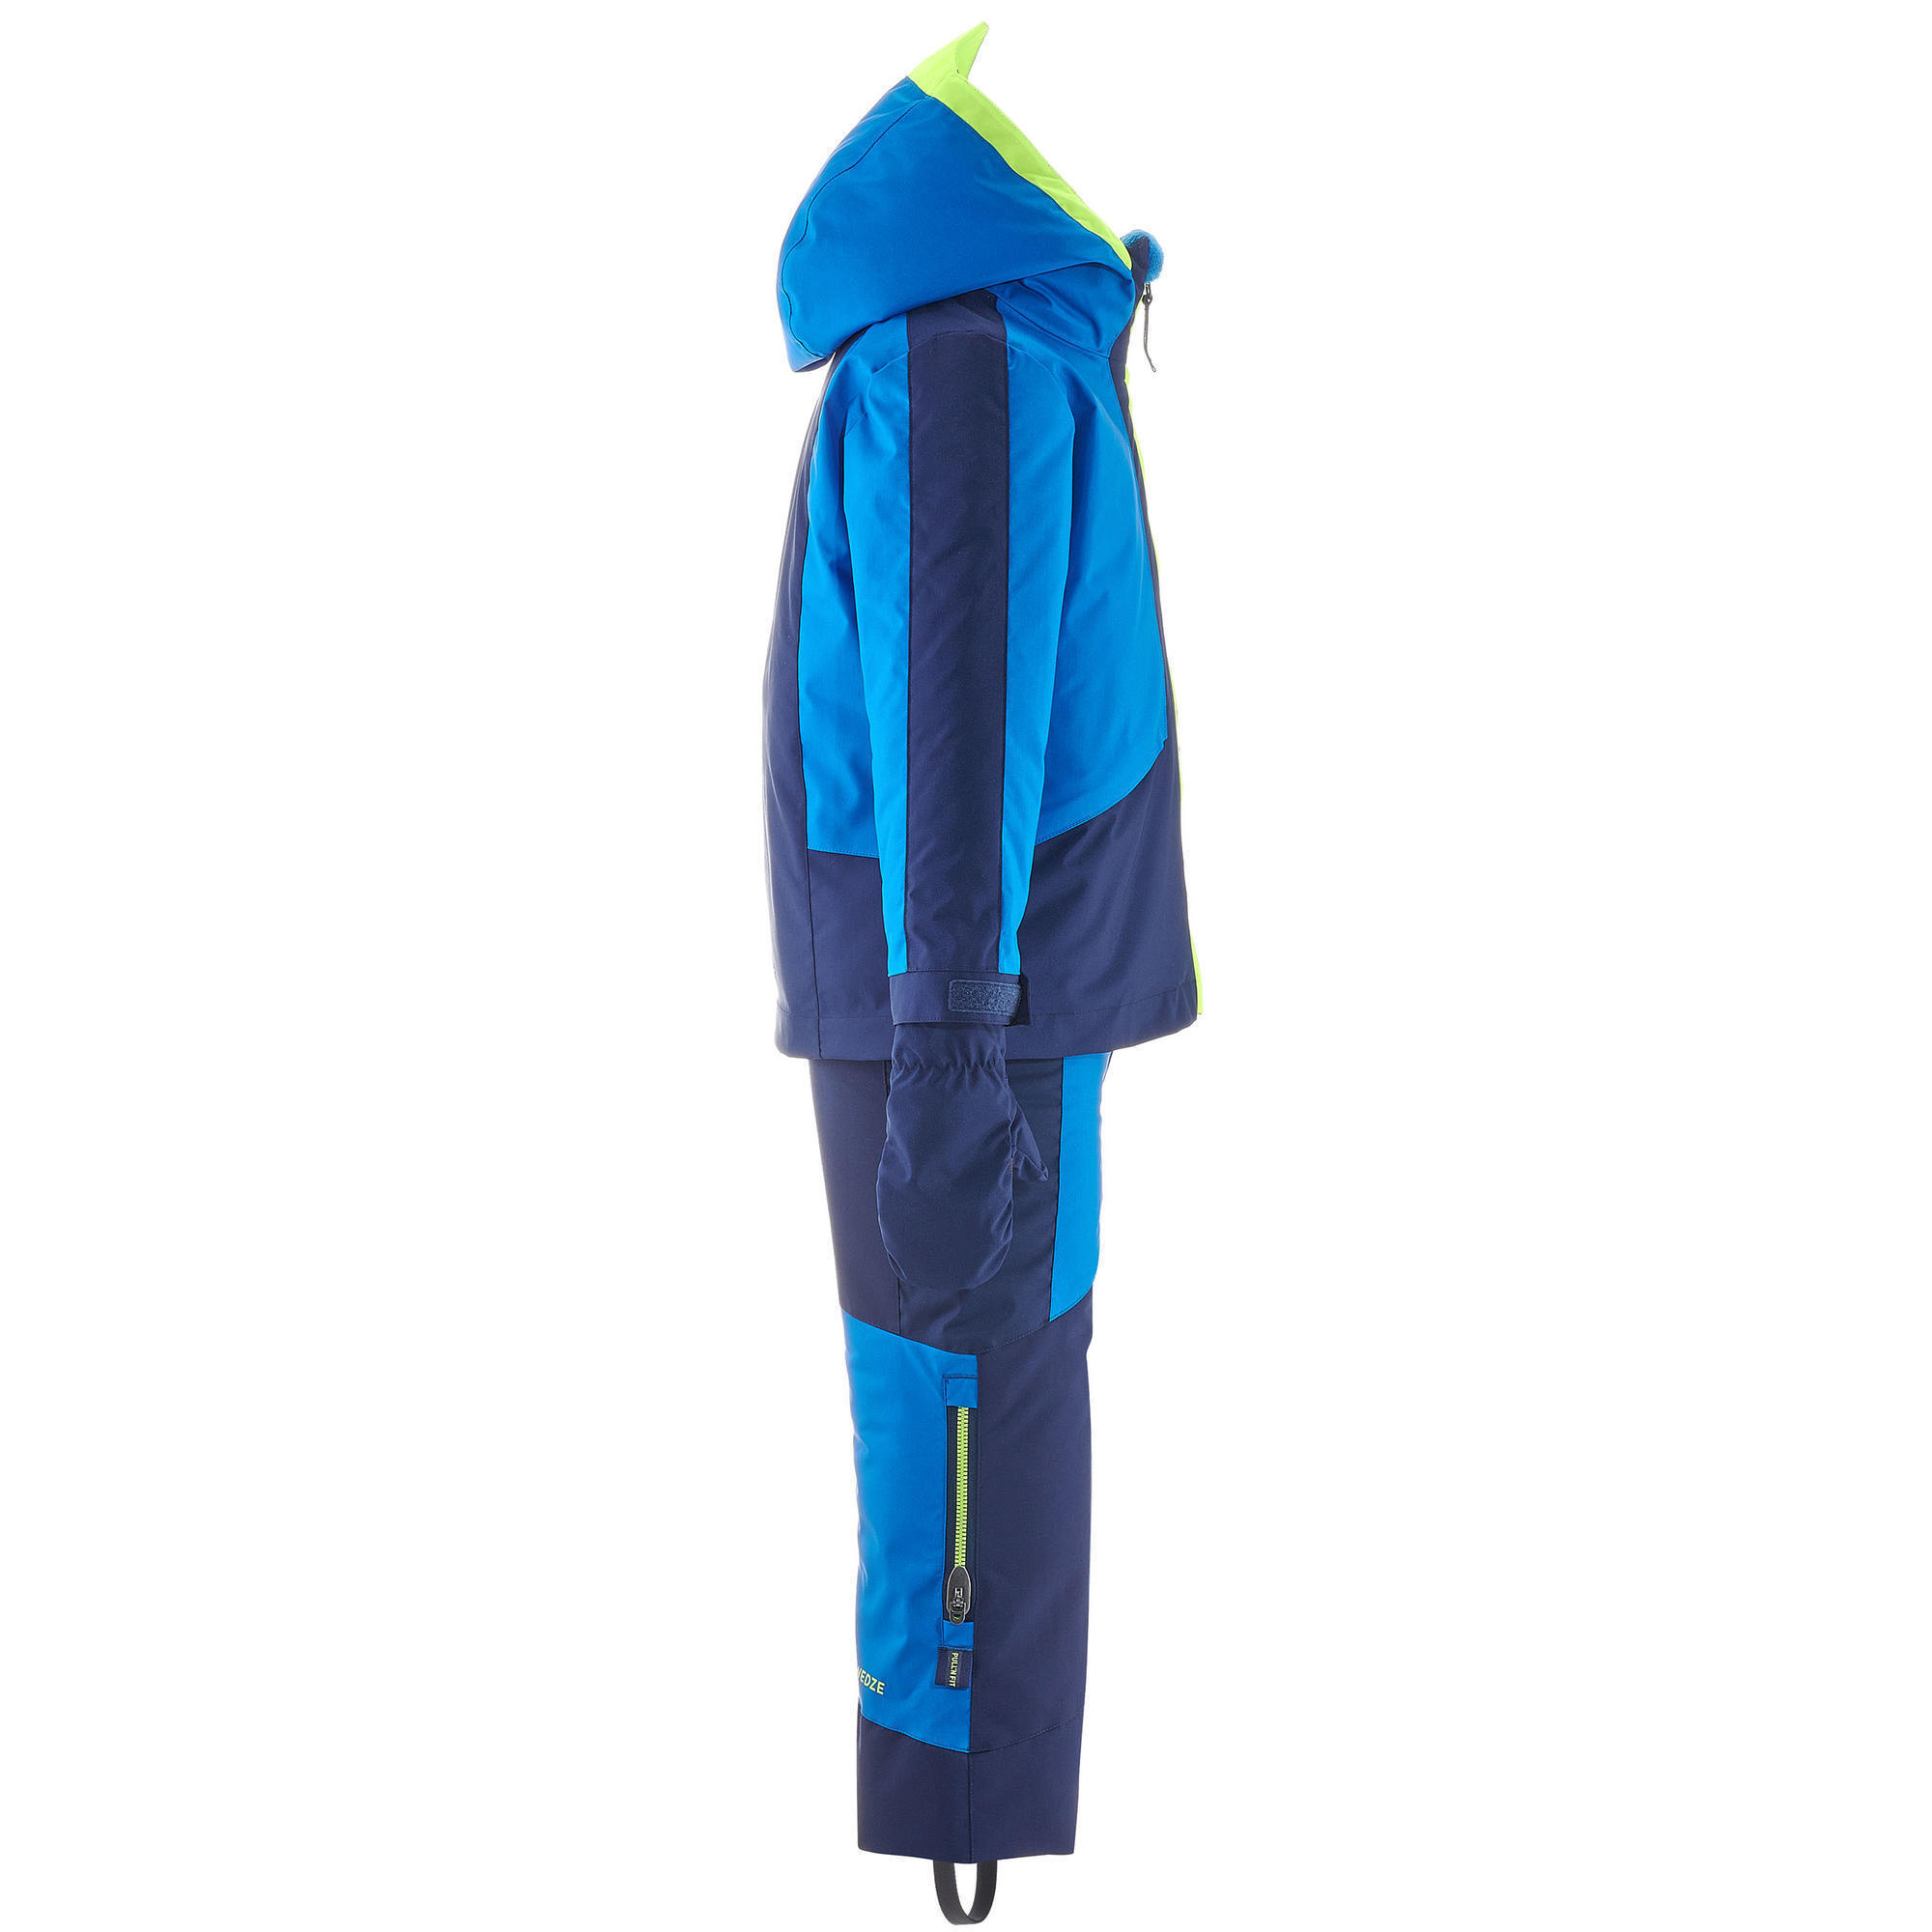 Kids’ Warm and Waterproof Ski Suit 580 - Blue 4/19